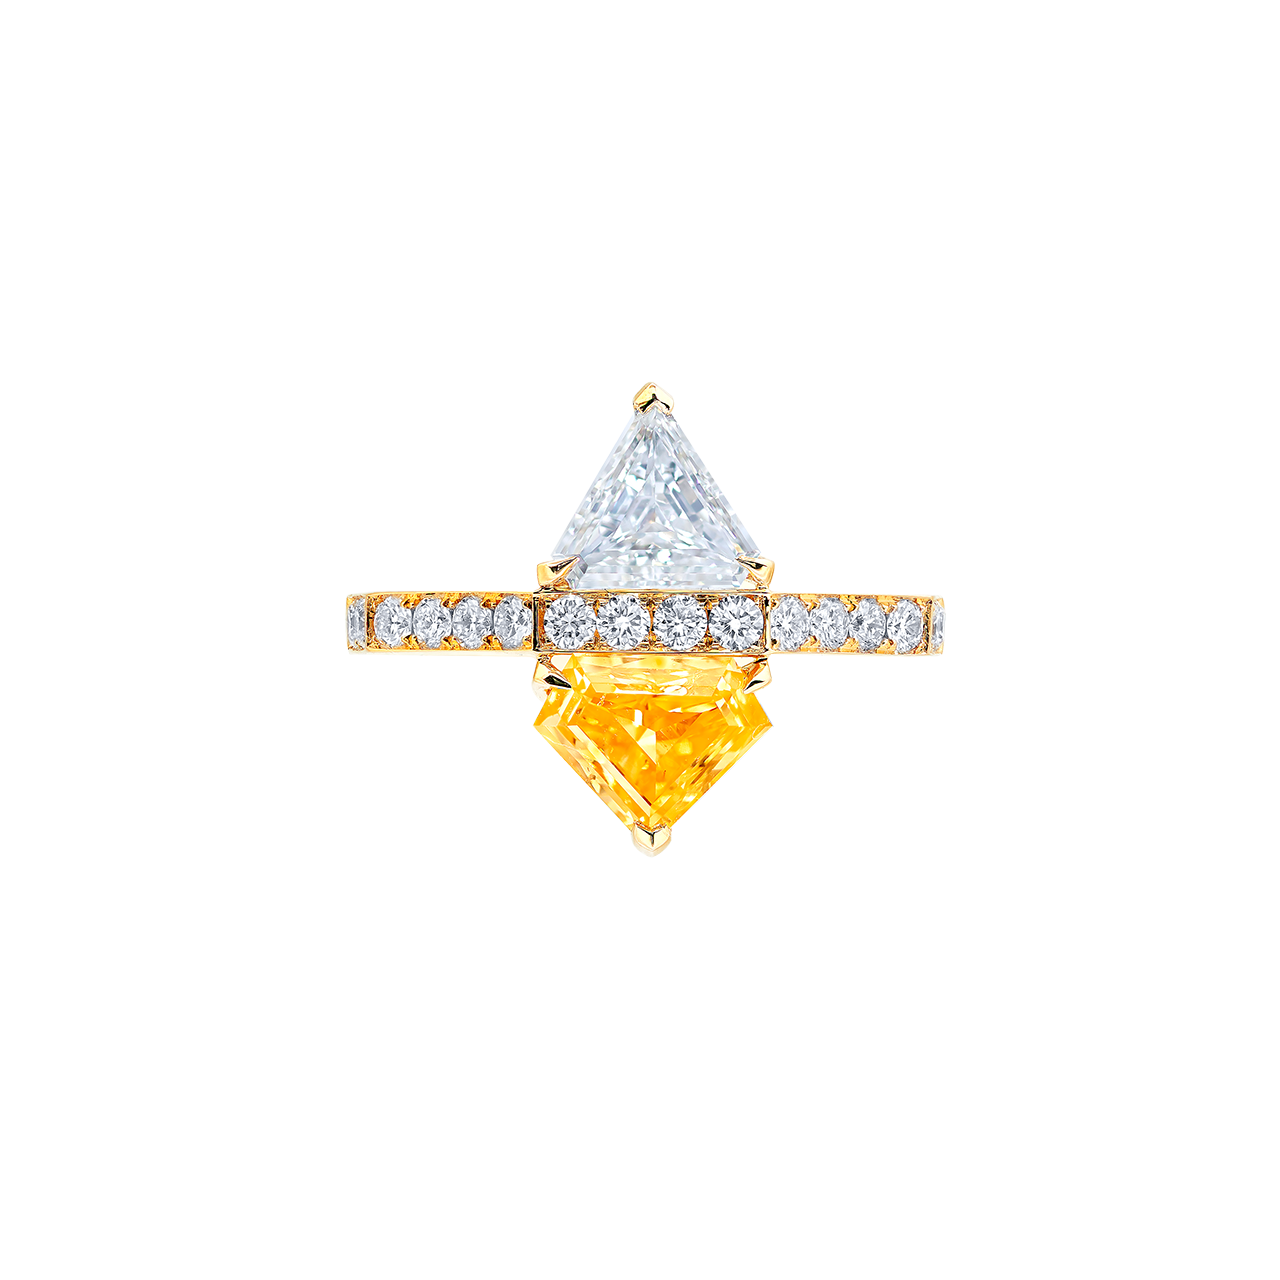 GIA 0.97克拉 濃彩橘黃彩鑽鑽石戒
FANCY INTENSE ORANGE-YELLOW 
COLOURED DIAMOND AND DIAMOND RING